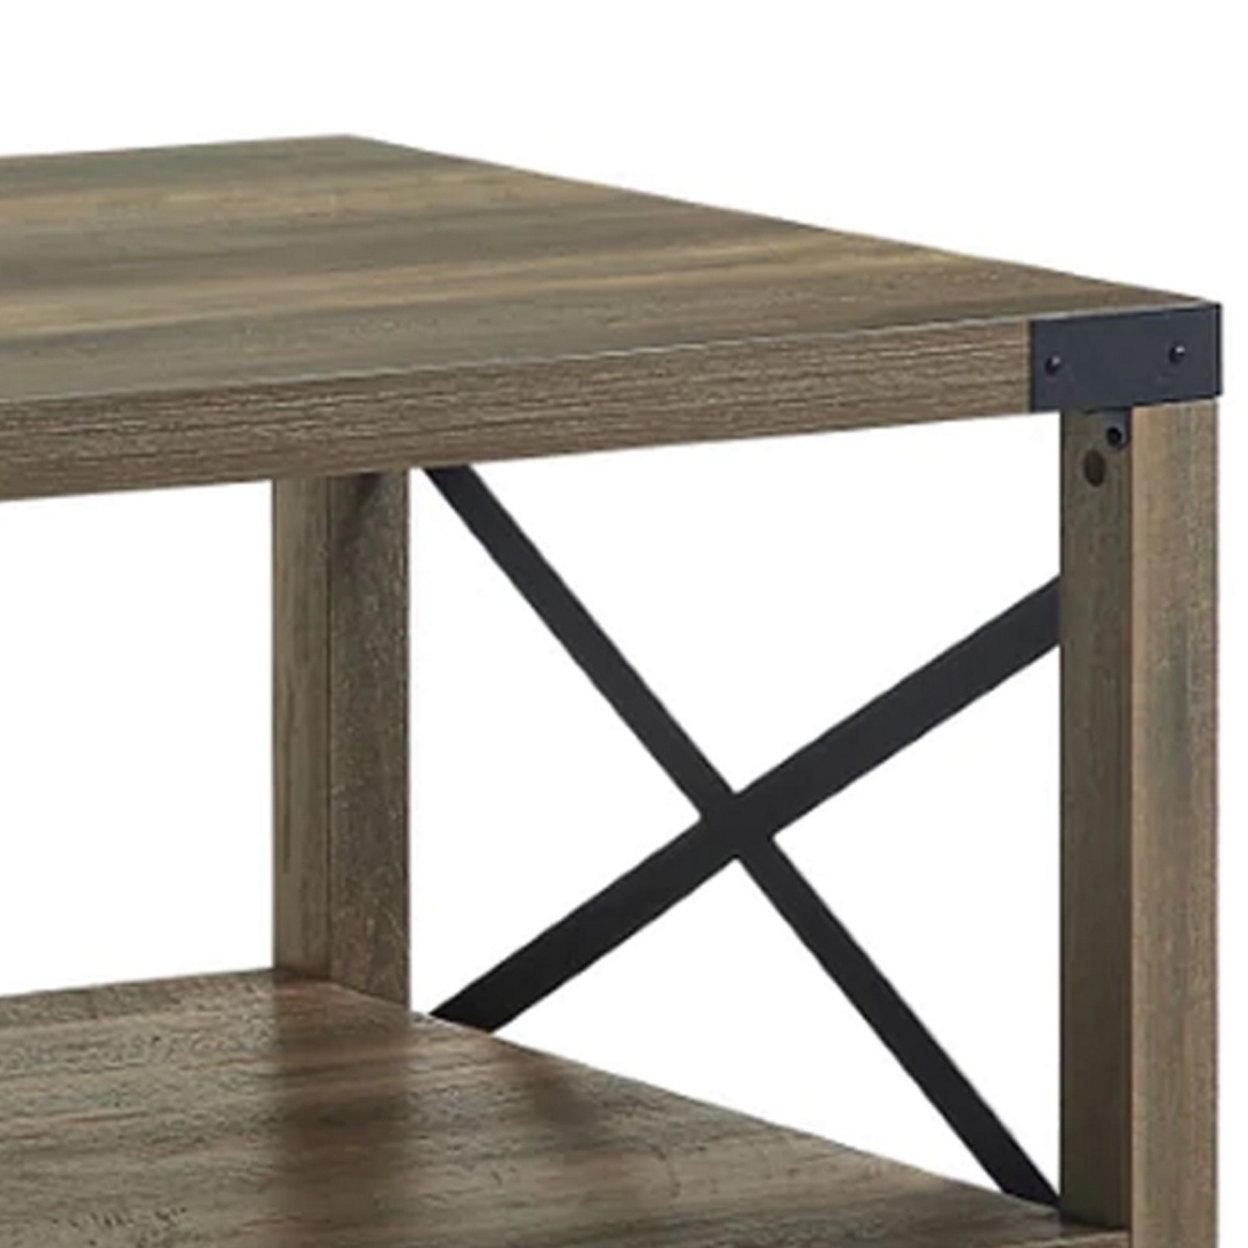 Eli 47 Inch Wood Coffee Table, Metal Brackets, Cross Bars, Rustic Oak Brown- Saltoro Sherpi